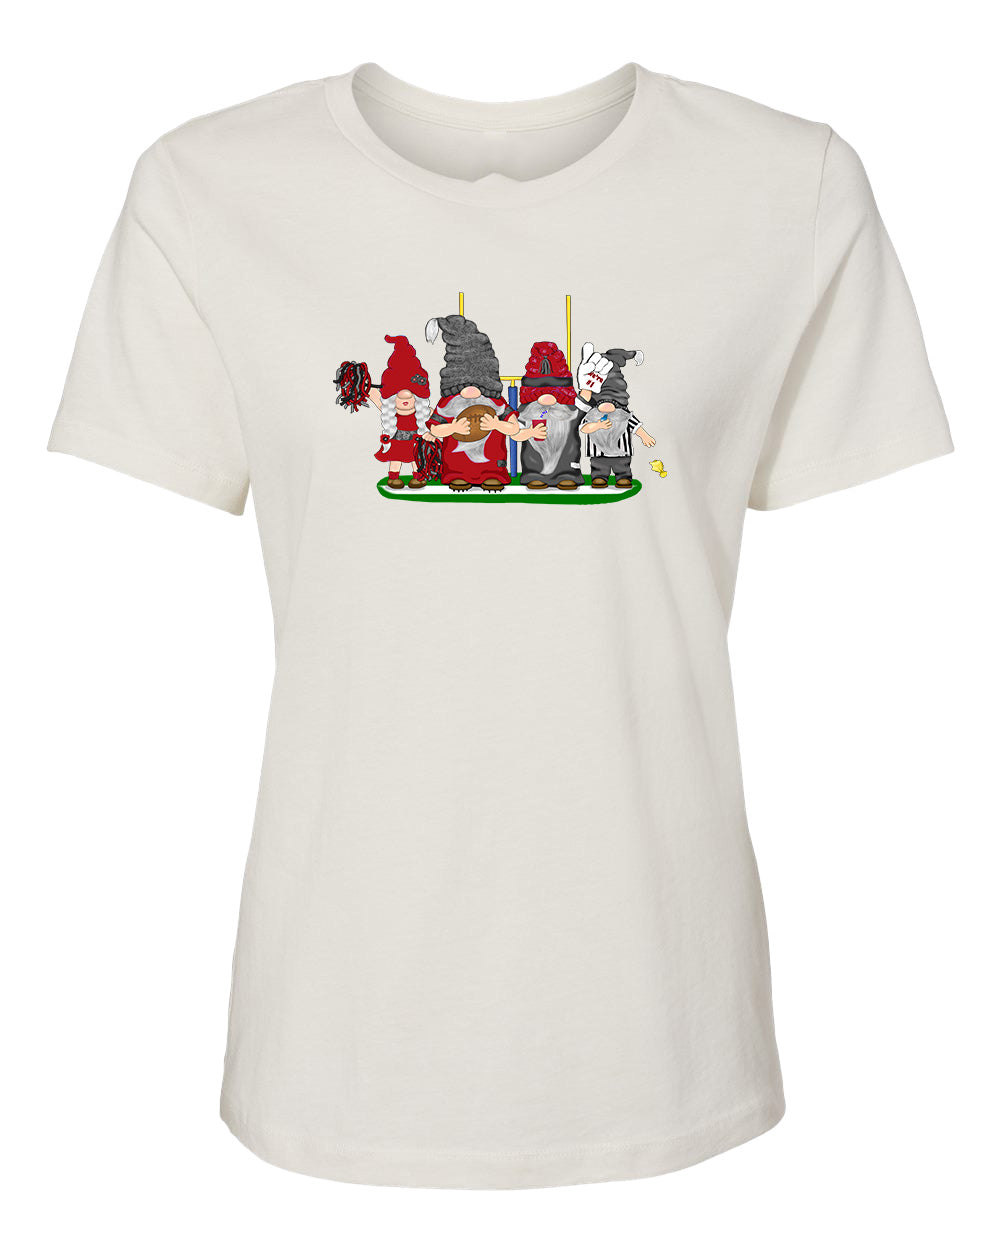 Red & Black Football Gnomes on Women's T-shirt (similar to Arizona)